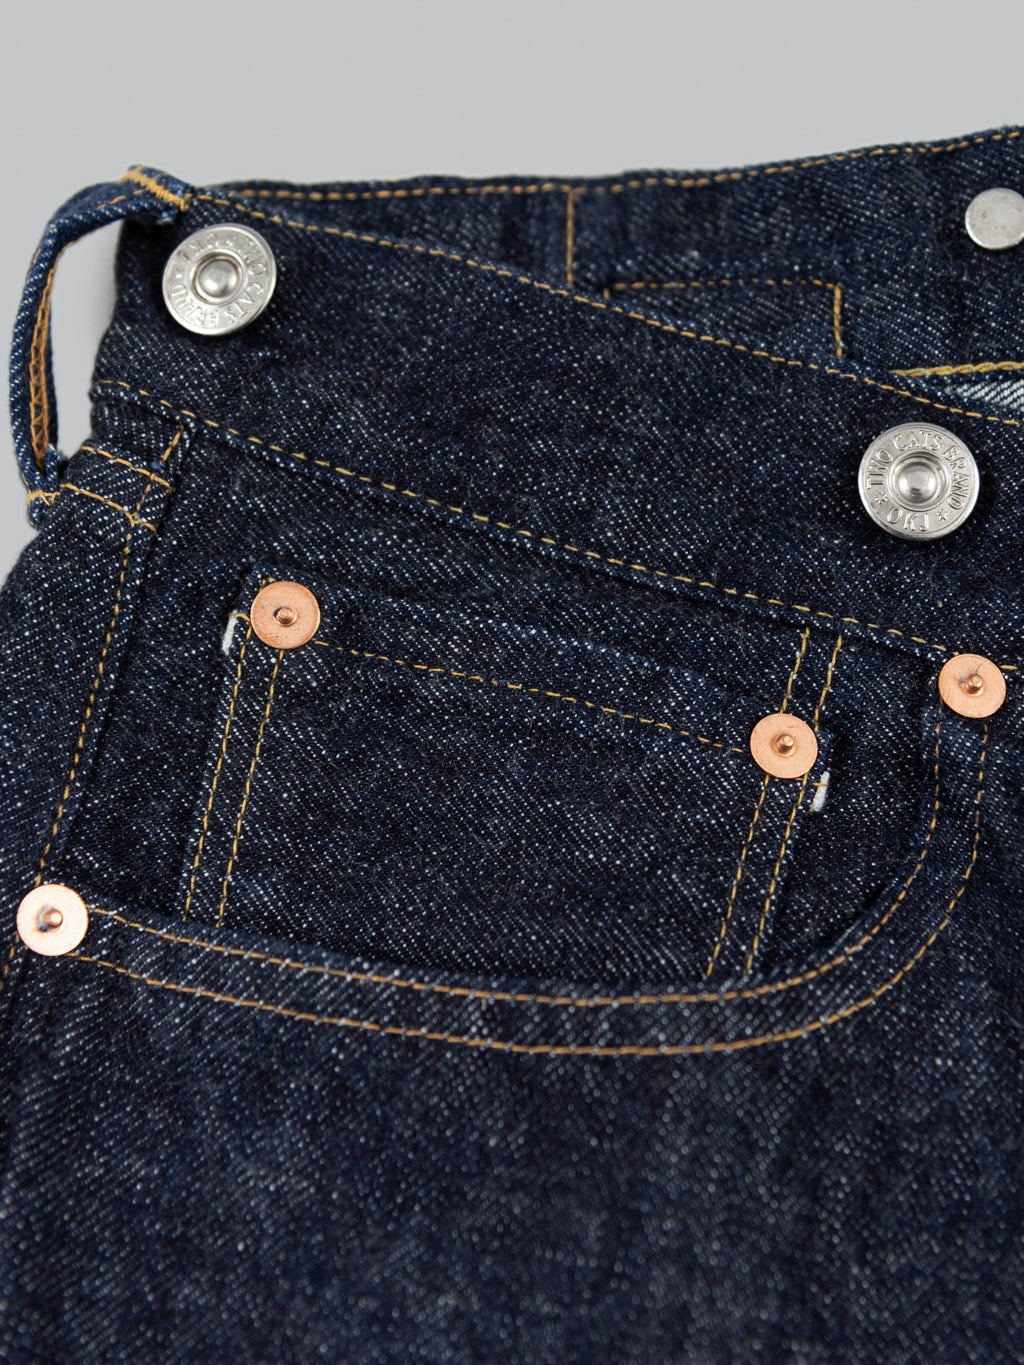 TCB 20s indigo Jeans one wash rivets closeup